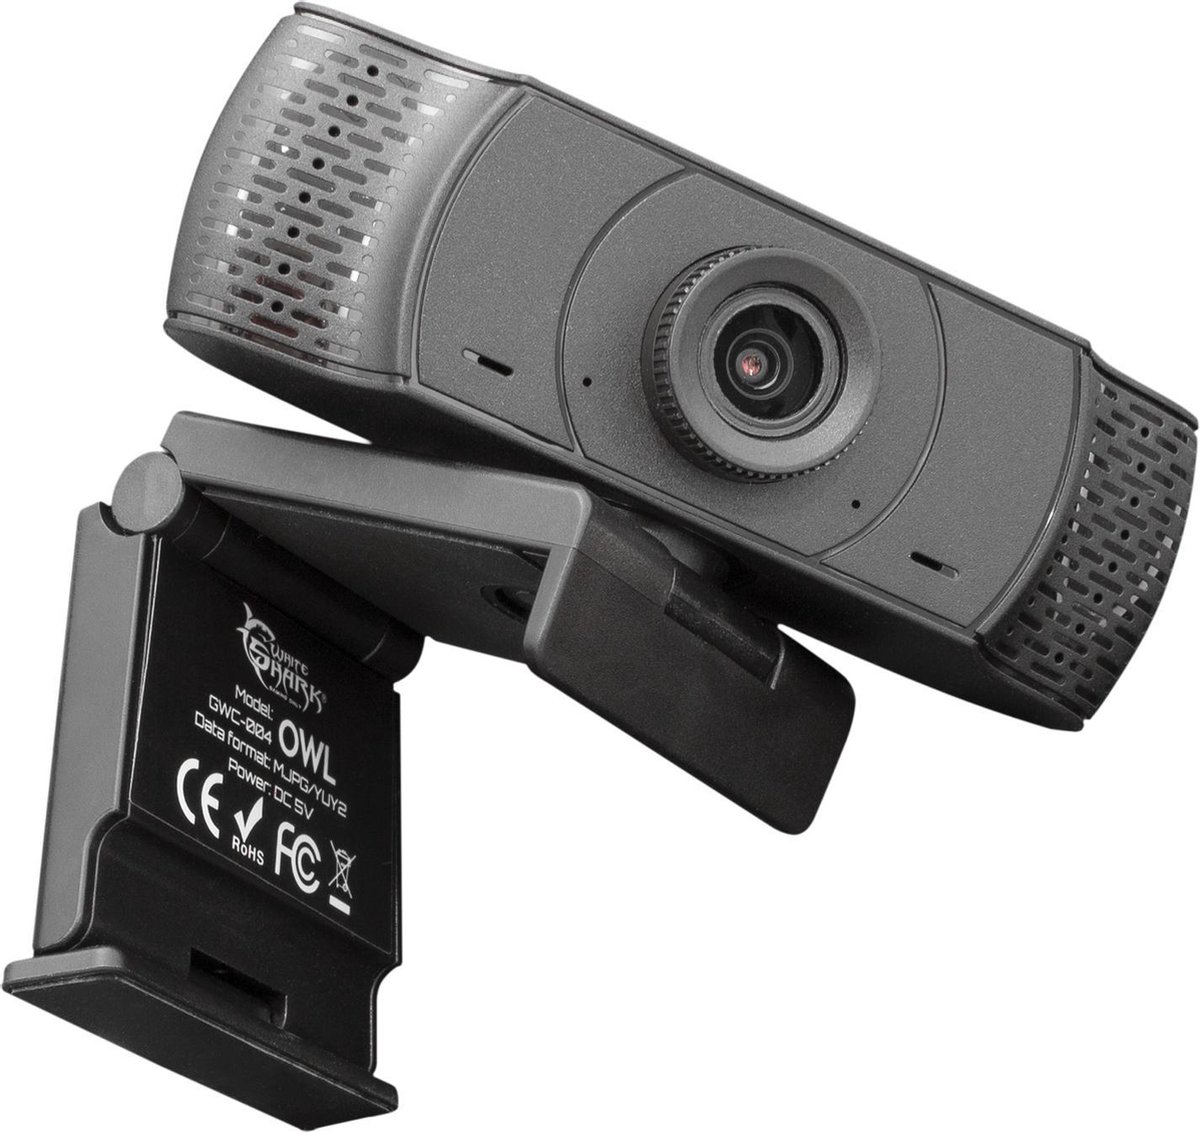 White Shark Owl Webcam Full HD 1080p met Microfoon - Draaibaar - Zwart